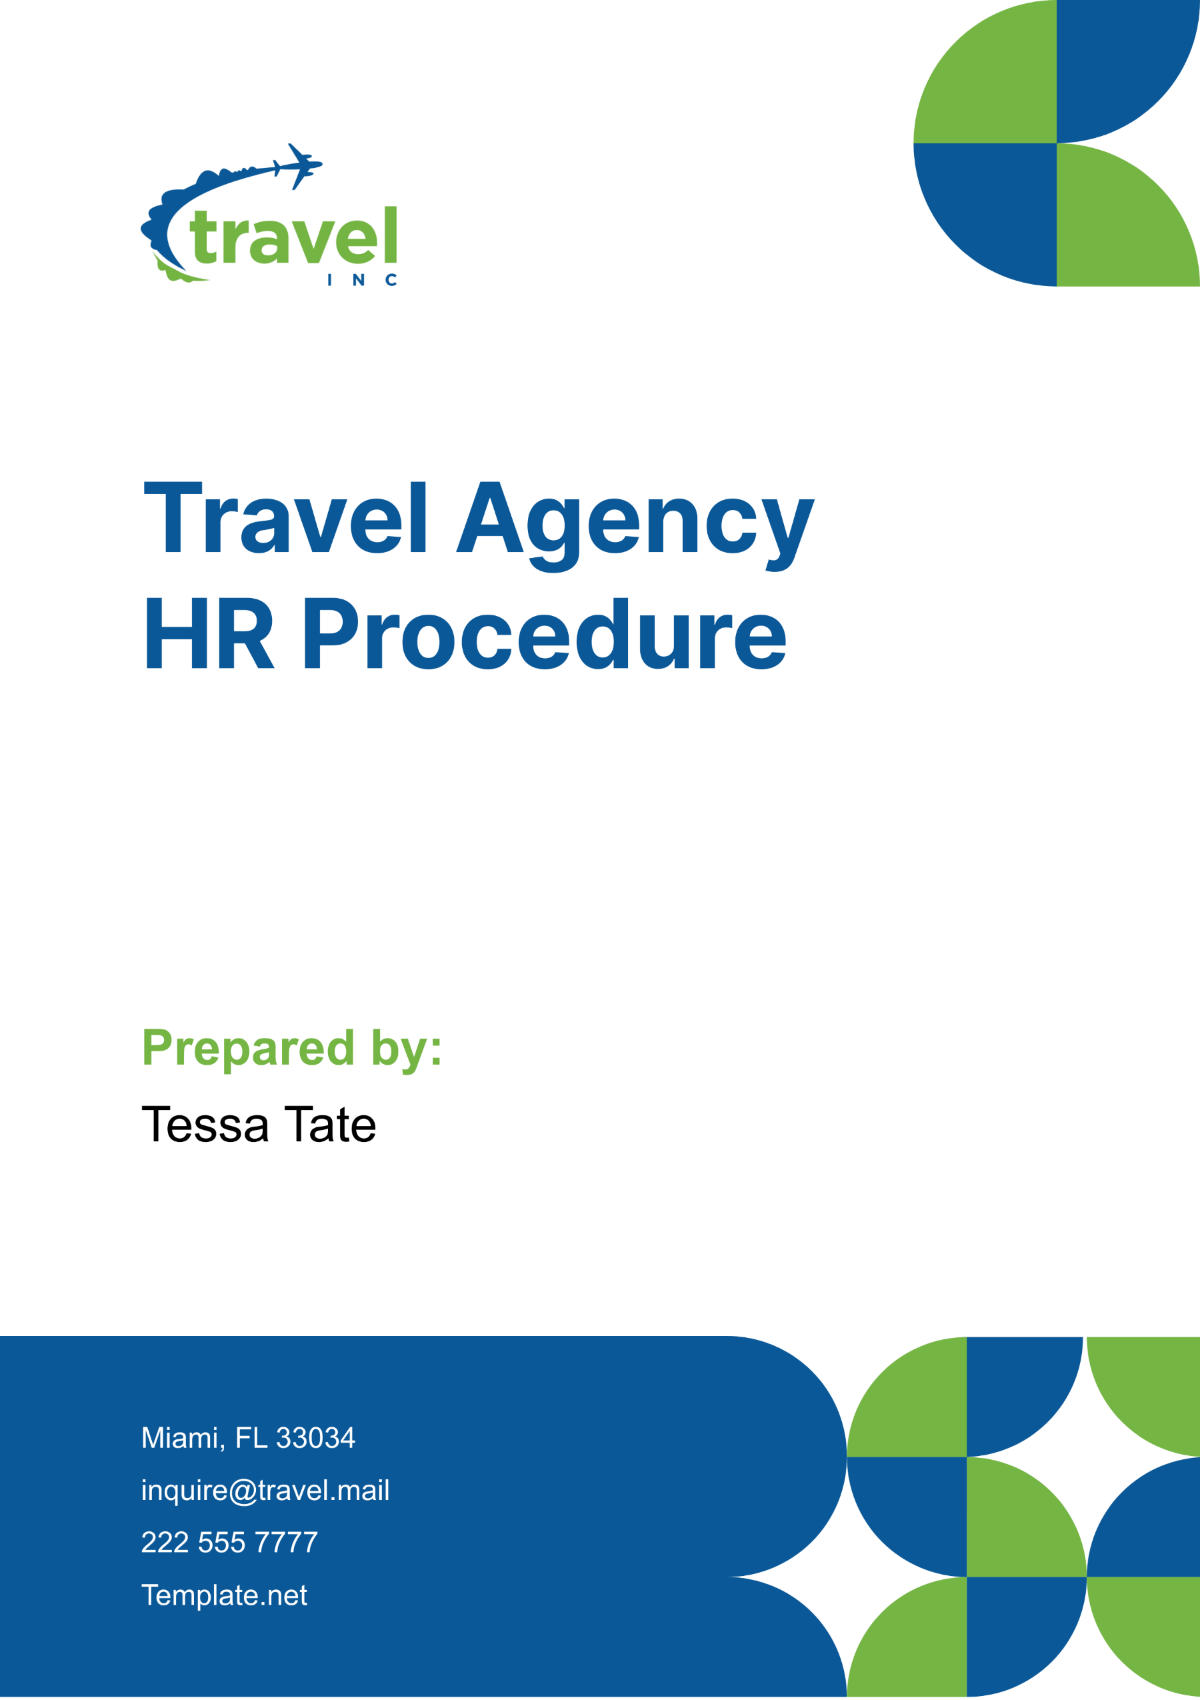 Travel Agency HR Procedure Template